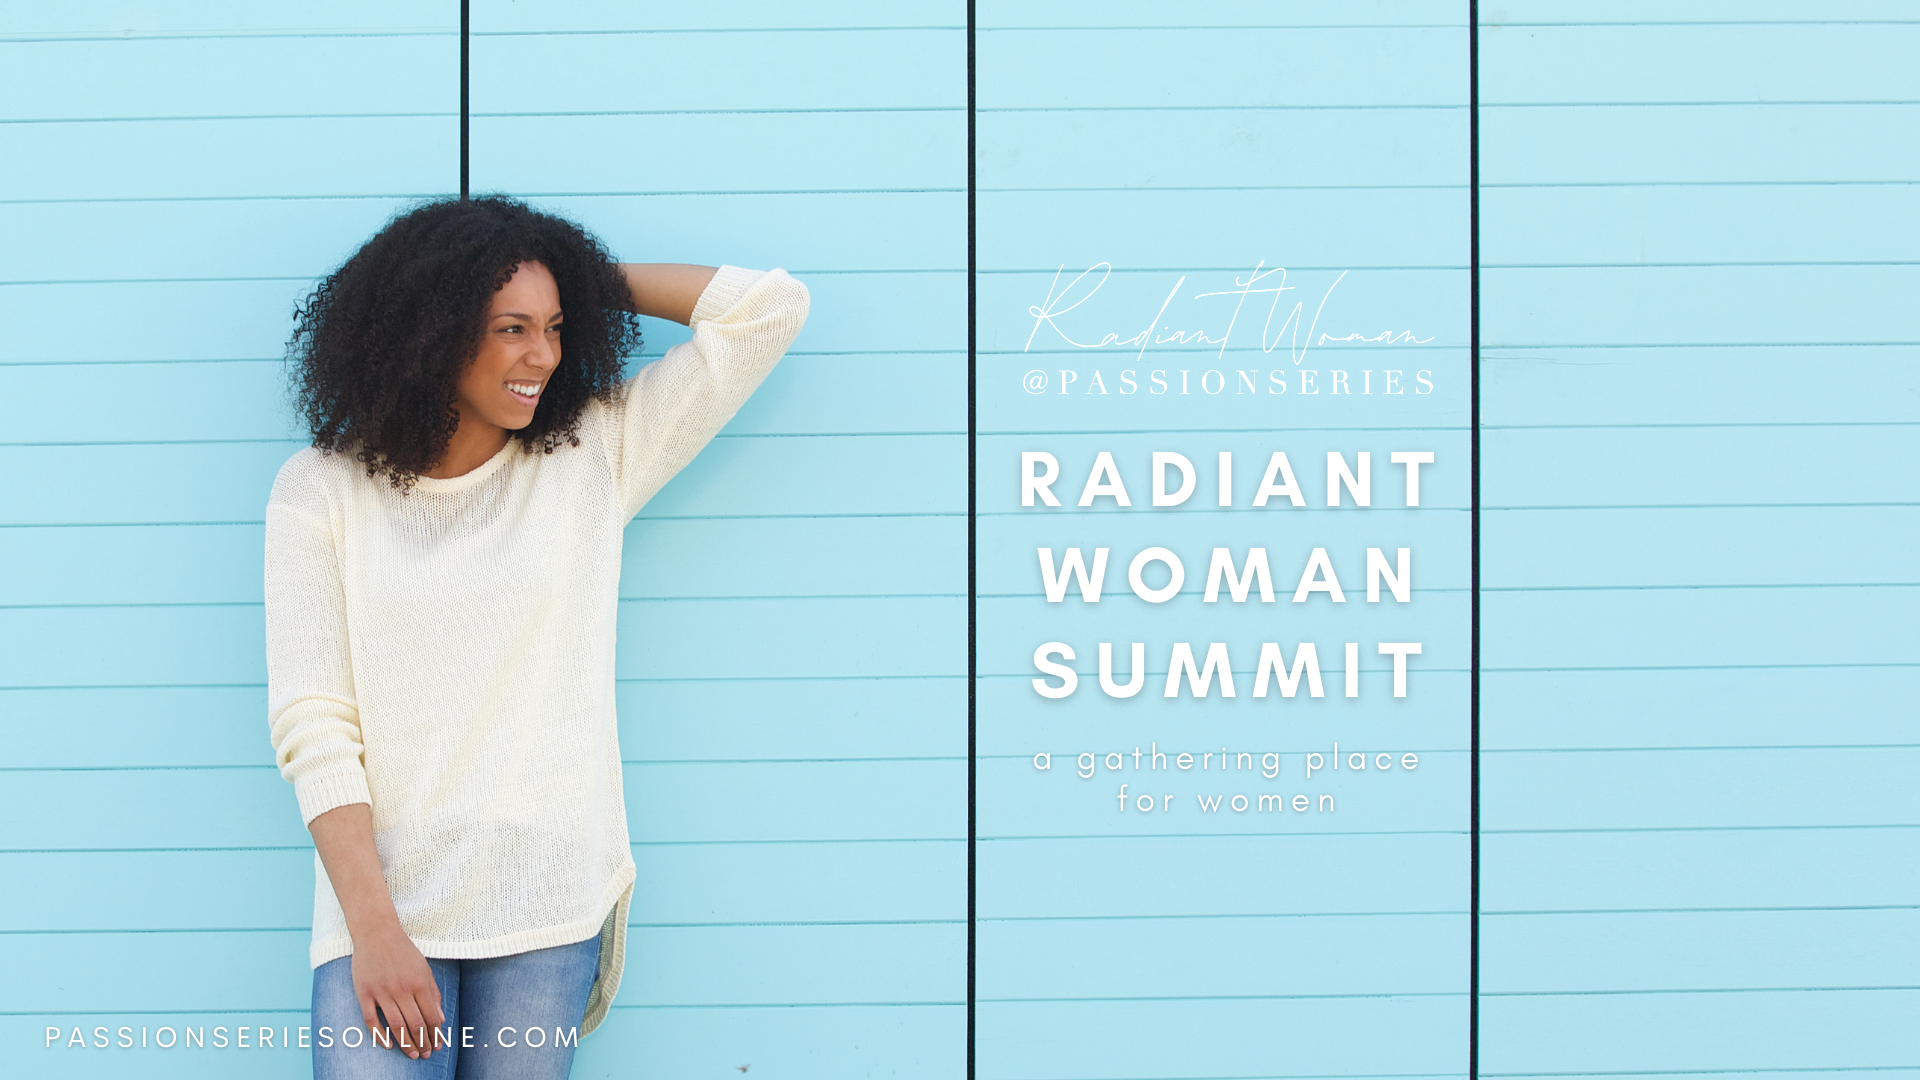 The 2021 Radiant Woman Summit